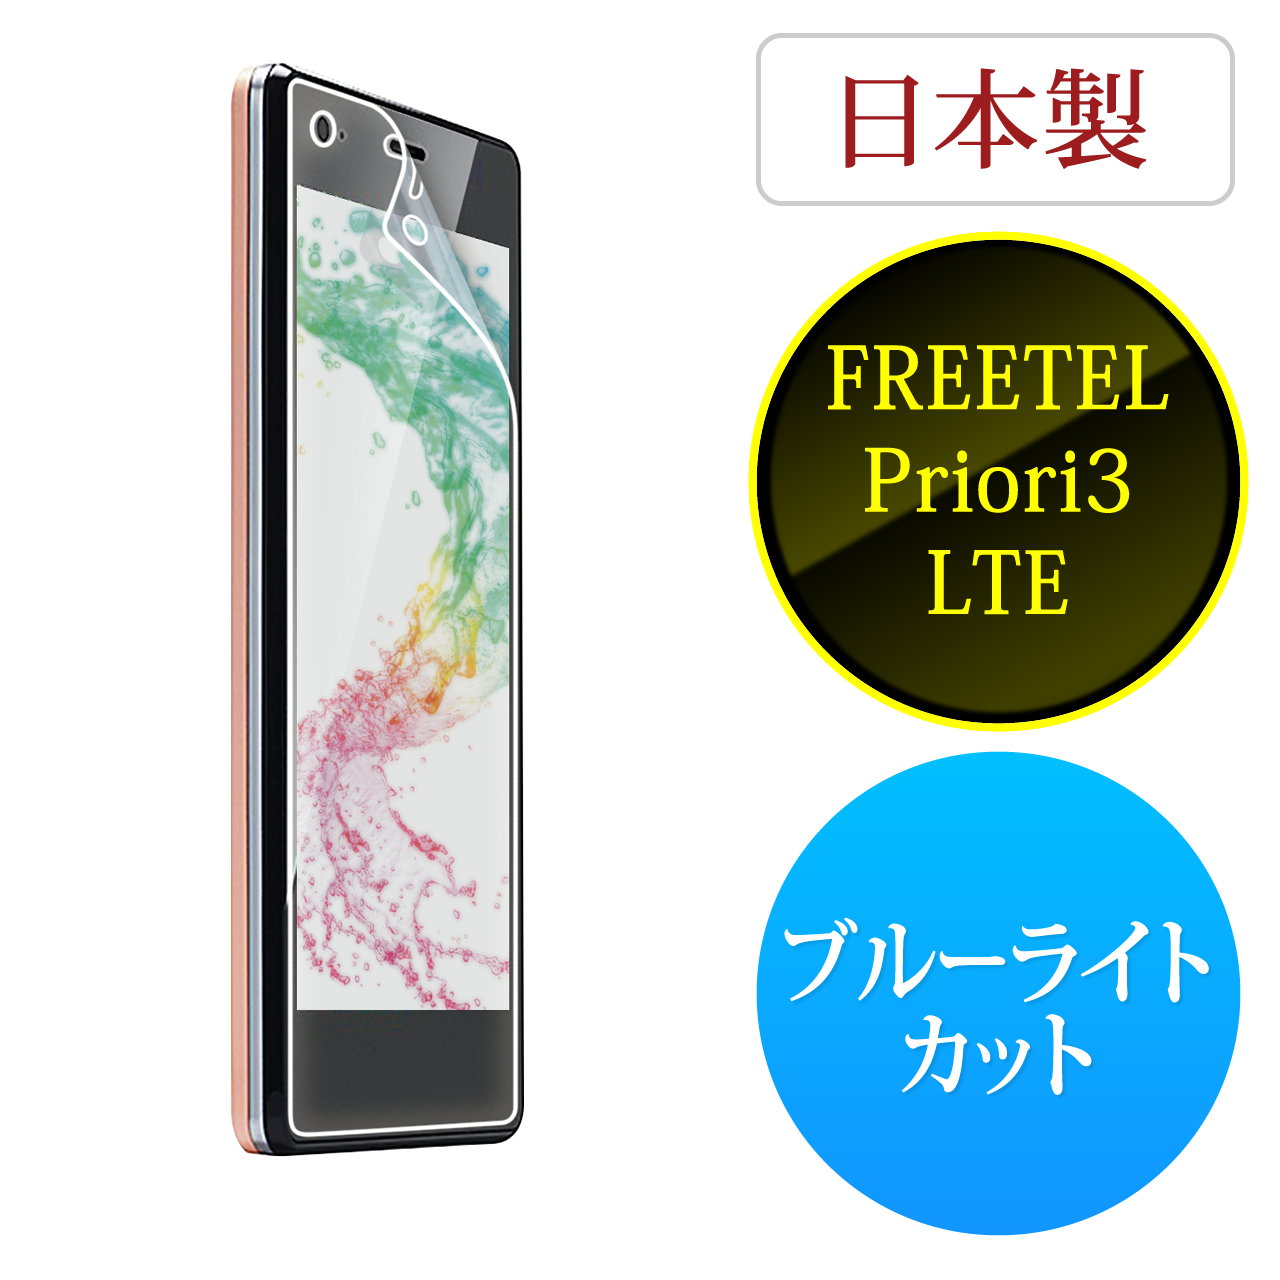 FREETEL Priori3 LTEՌzu[CgJbgtBiSIMt[X}zE˖h~Edx3HE0.28mmj 200-LCD038